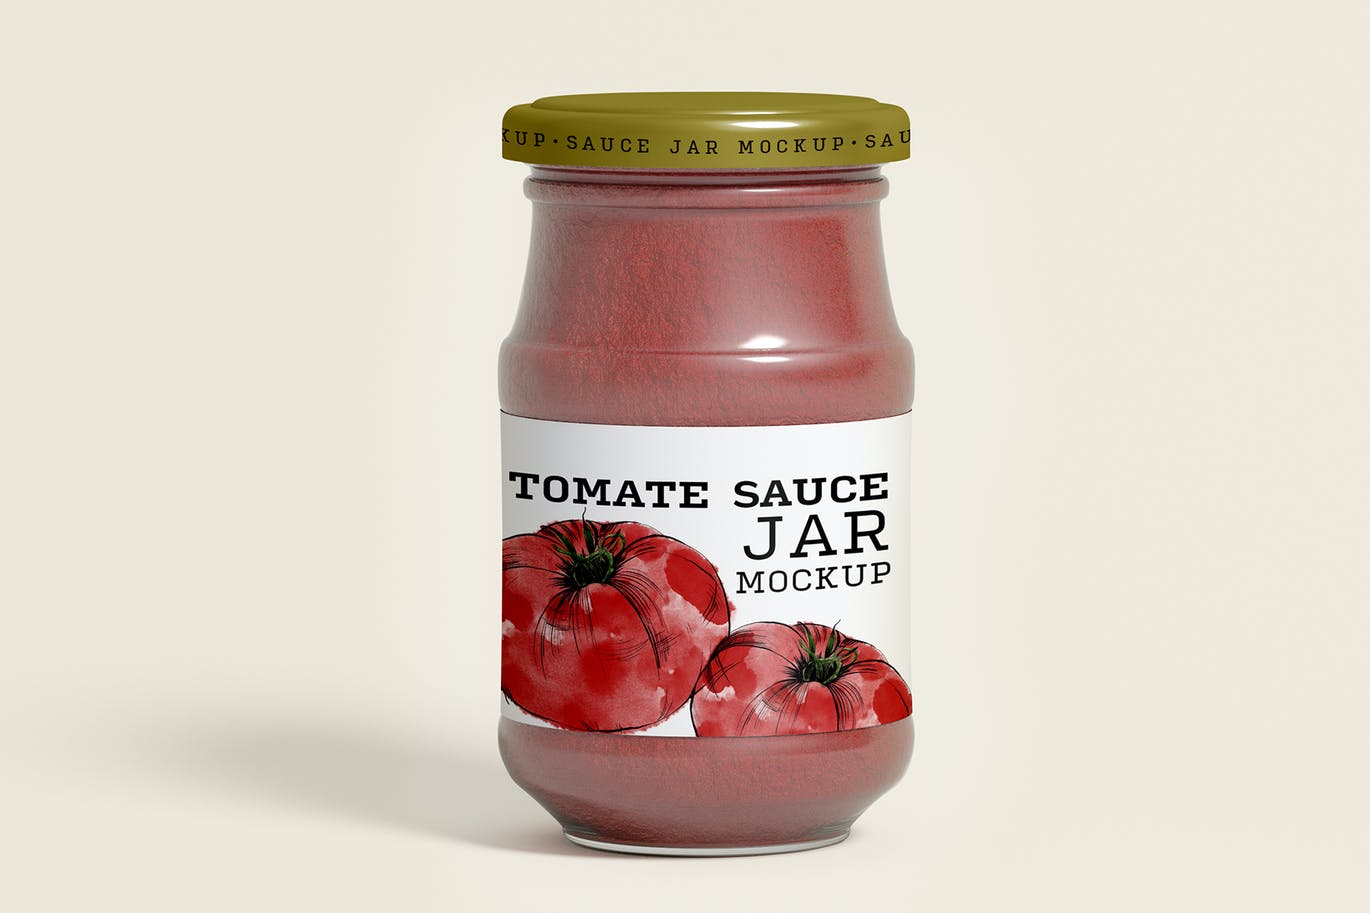 番茄酱玻璃罐包装设计样机素材 Tomato Sauce Jar Mockup